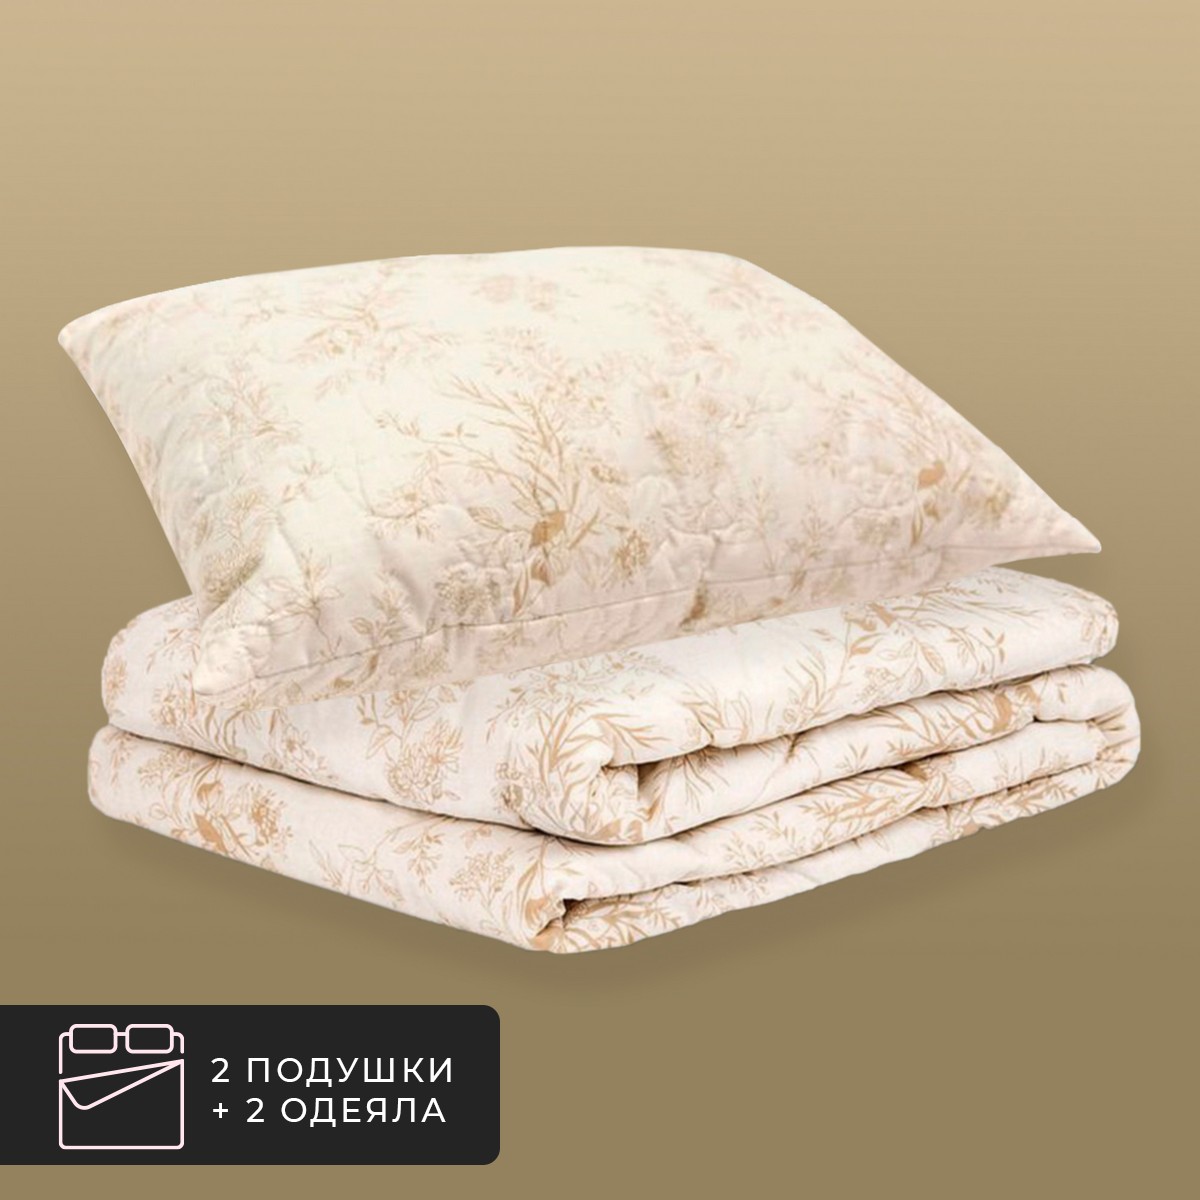 Набор 2 одеяла + 2 подушки Хлопок-натурэль, хлопковое волокно в хлопковом тике (200х210-2 шт, 50х70-2 шт) CLASSIC BY T